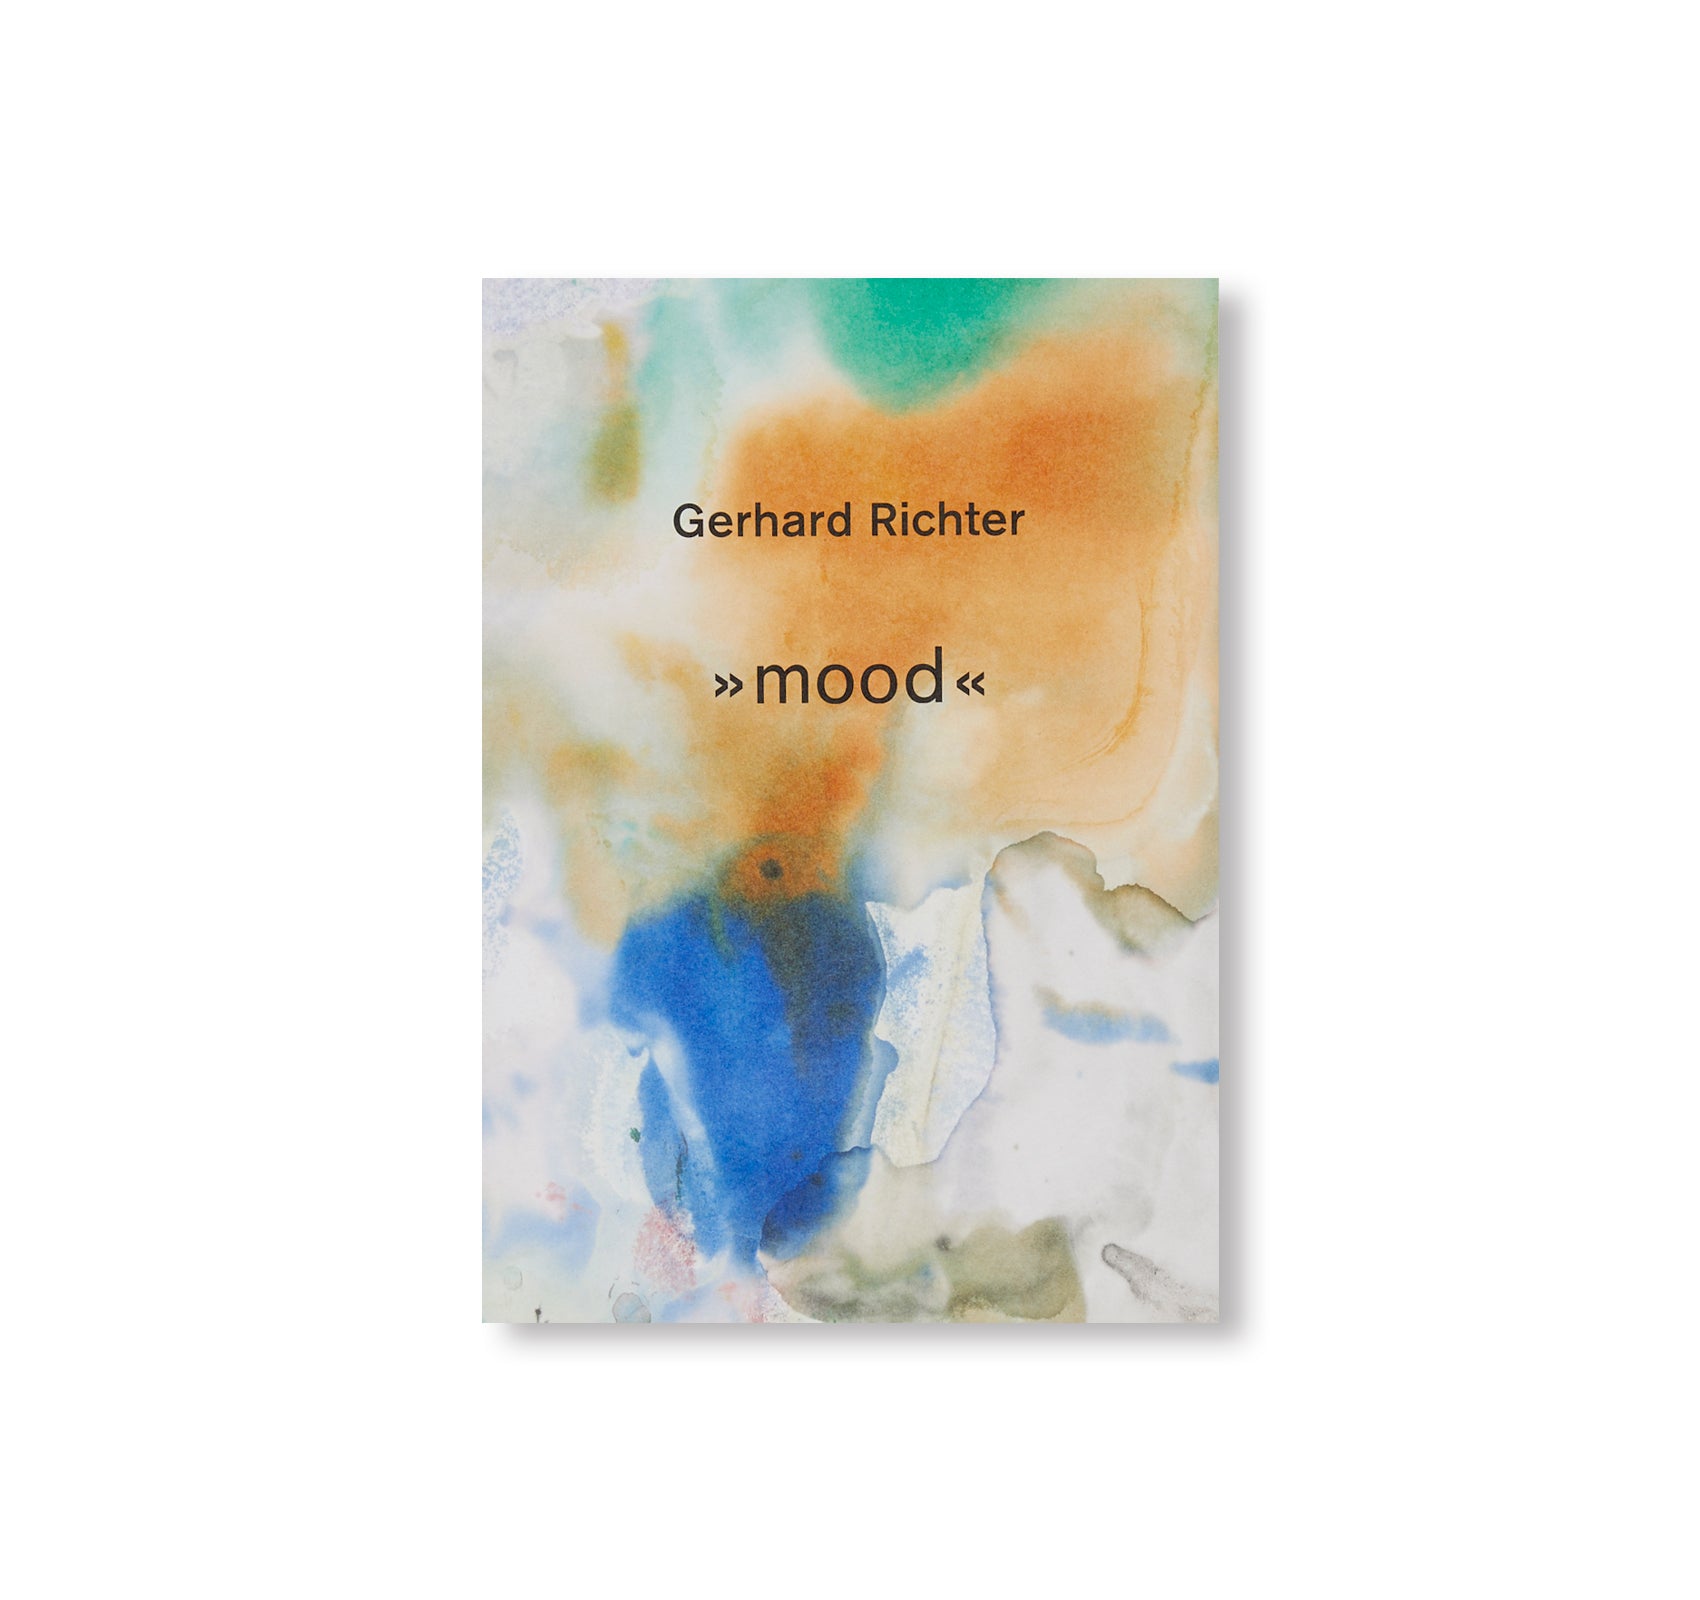 MOOD by Gerhard Richter